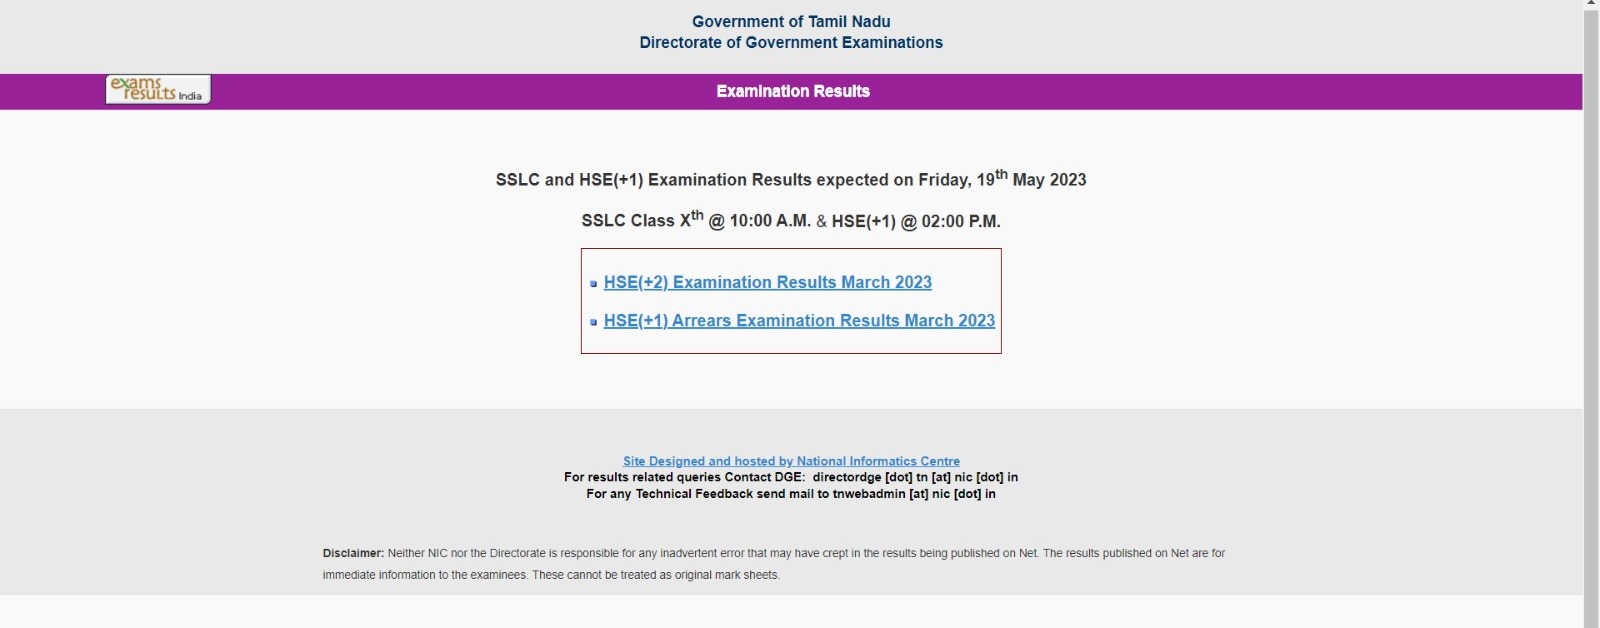 tamil nadu 10th board exam time table 2023 tn10th result tn.results.nic.in 10th result 2023 tn 10th result 2022 www.tnresults.nic.in 10th result 2023 tn 12th result 2023 tn 11th result date 2023 www.dge.tn.gov.in 2023 10th tamil nadu sslc board exam results www.dge.tn.gov.in 2023